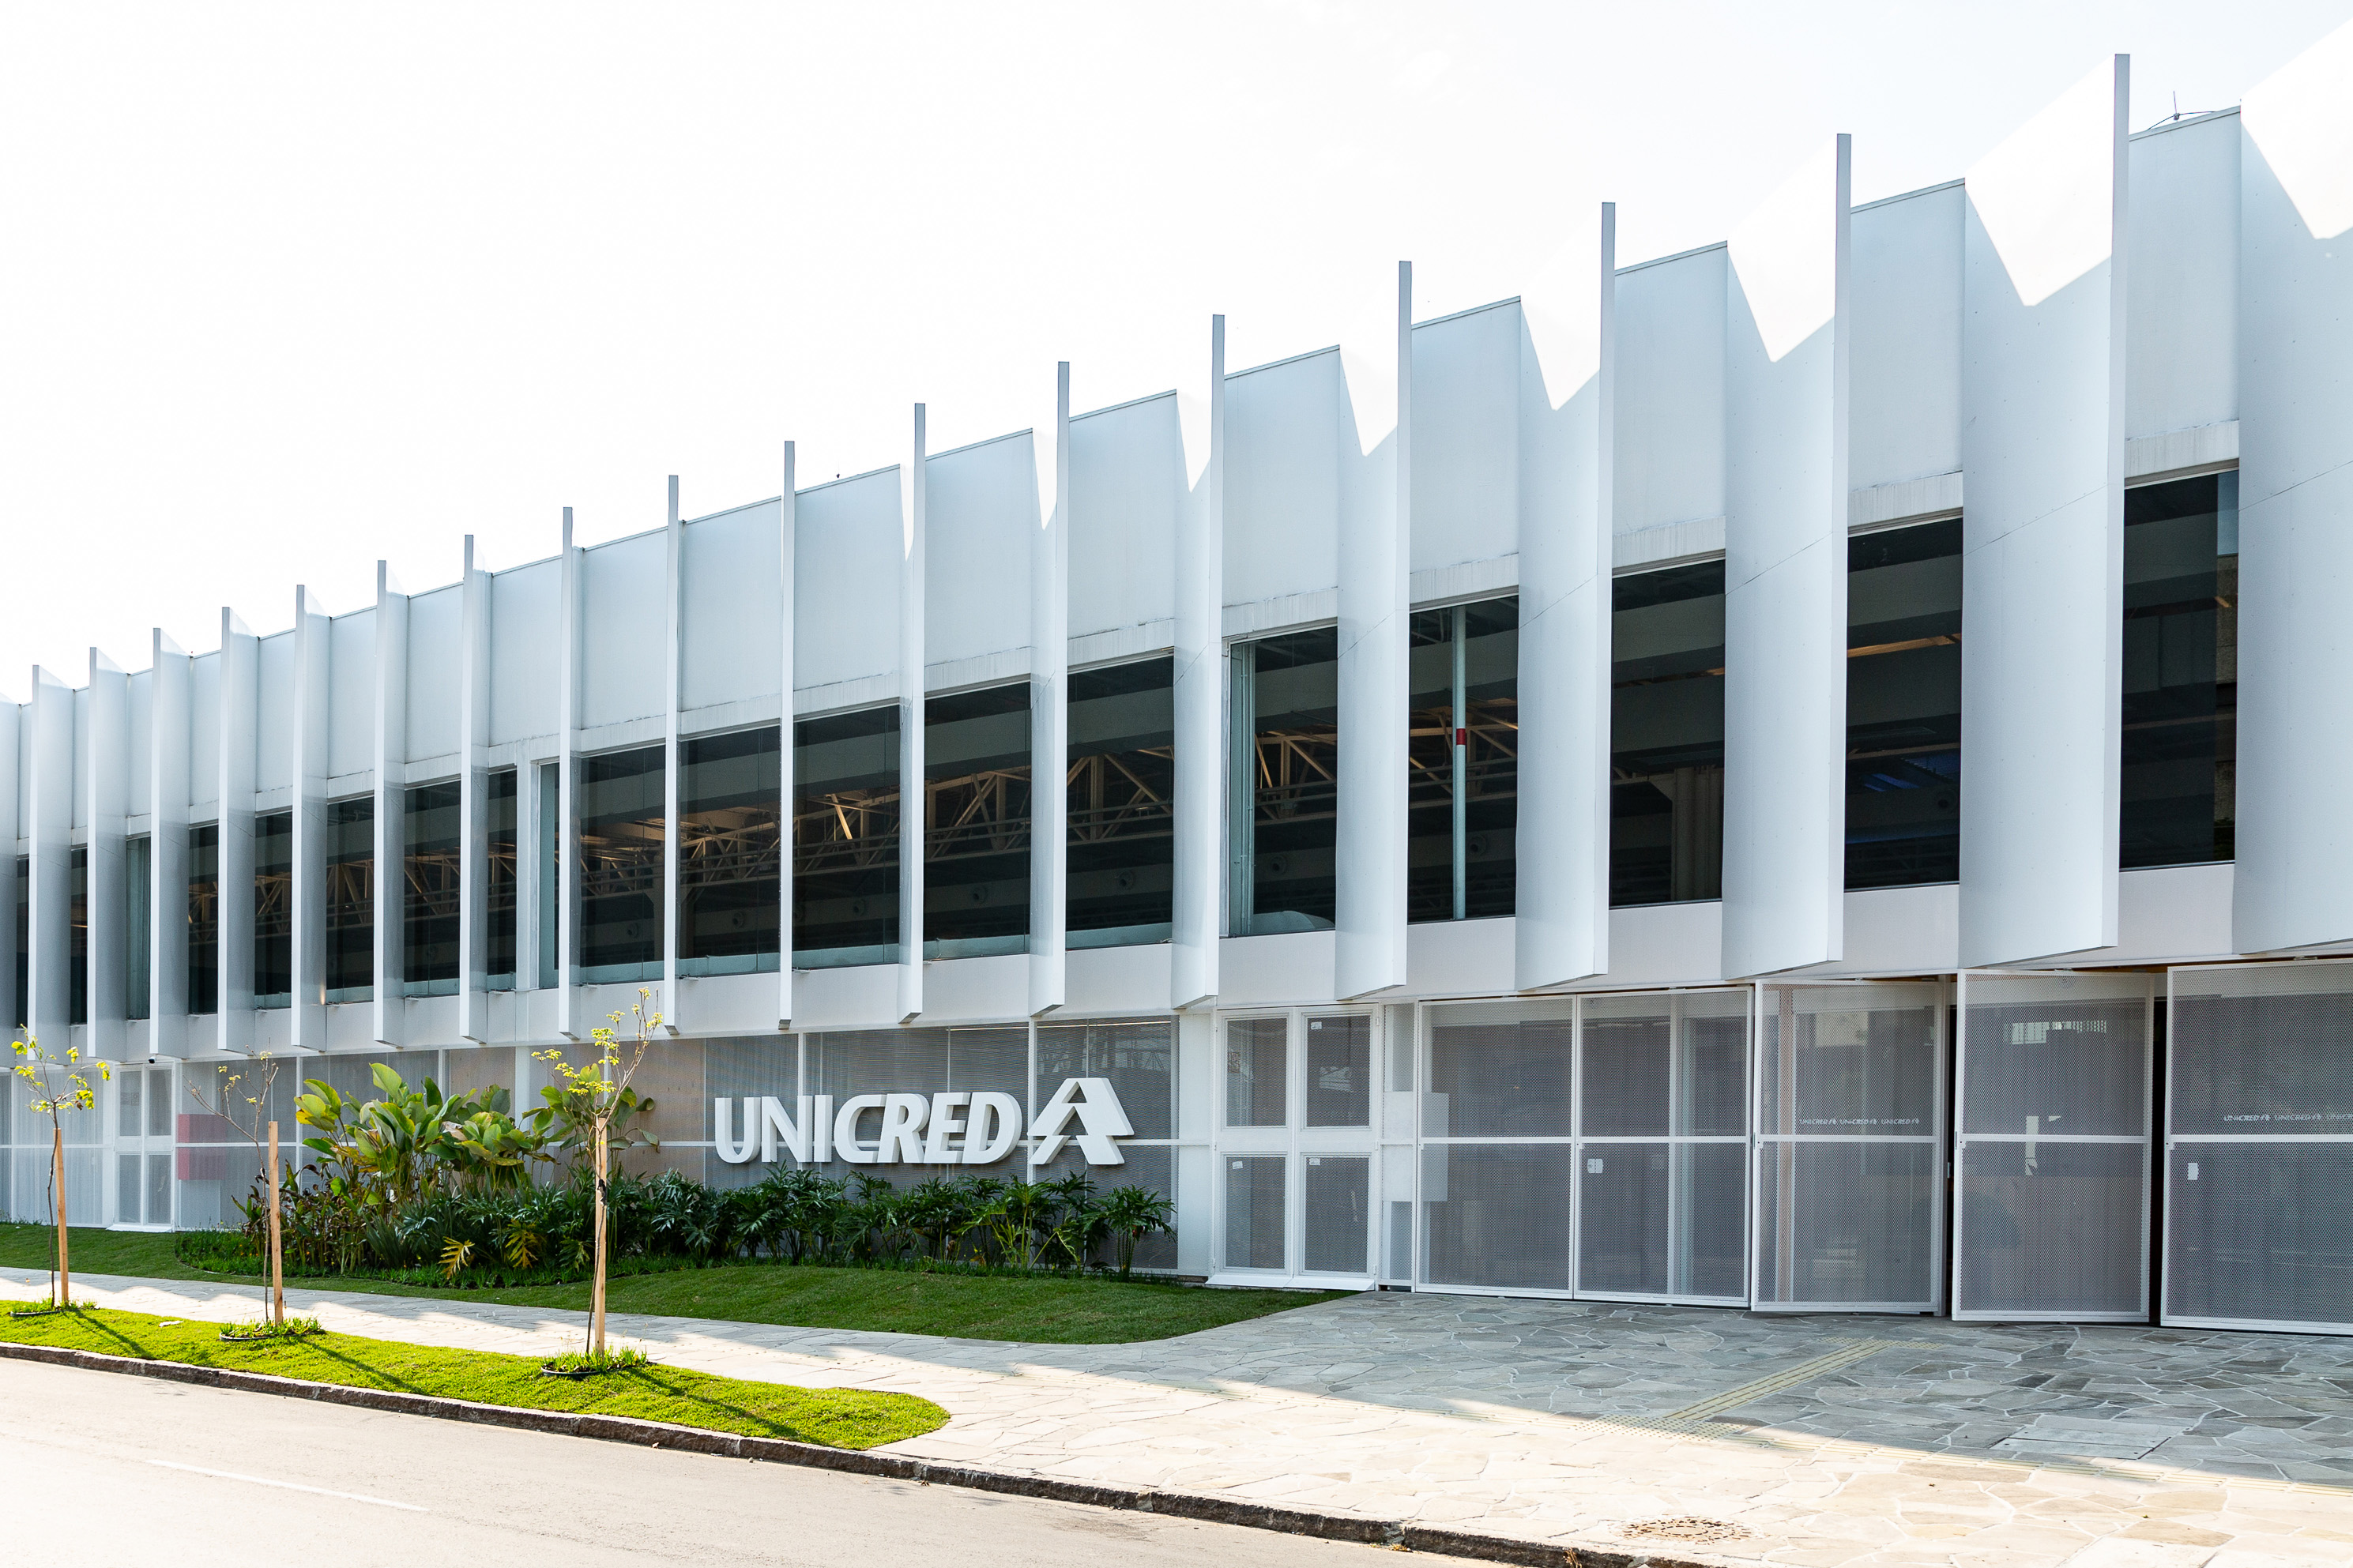 Unicred realiza assembleias de forma totalmente online